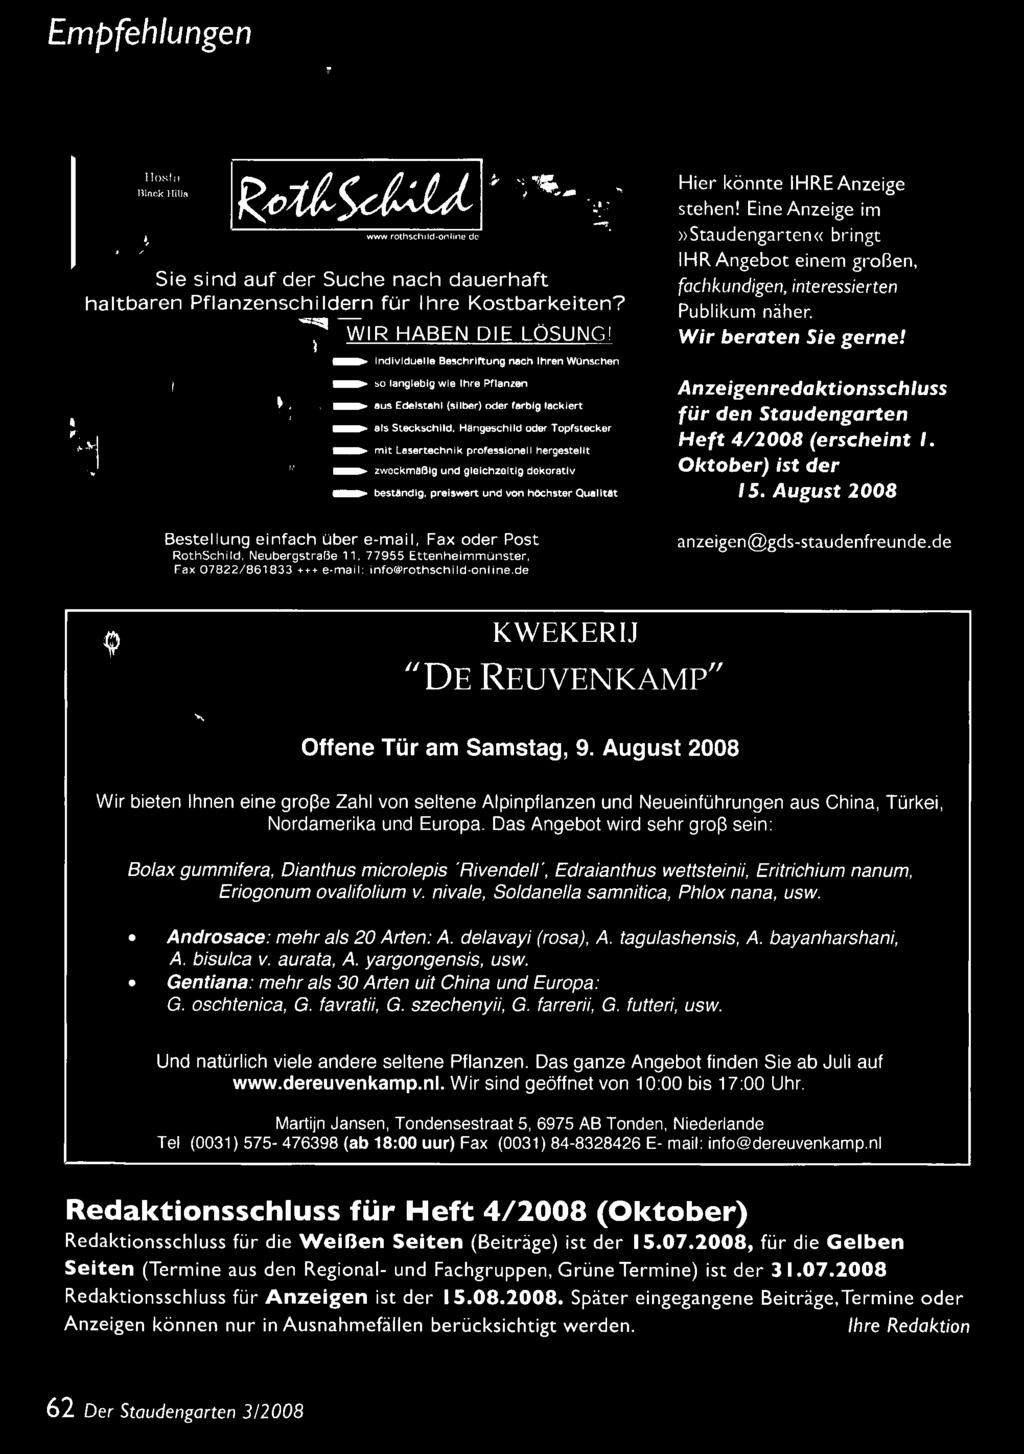 August 2008 Bestellung einfach über e-mail, Fax oder Post RothSchild, Neubergstraße 11, 77955 Ettenheimmünster, Fax 07822/861833 +., e-mail: infowrothschild-online.de anzeigen@gds-staudenfreunde.